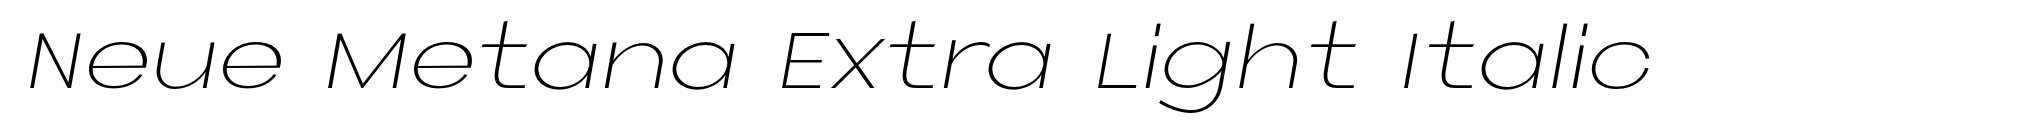 Neue Metana Extra Light Italic image